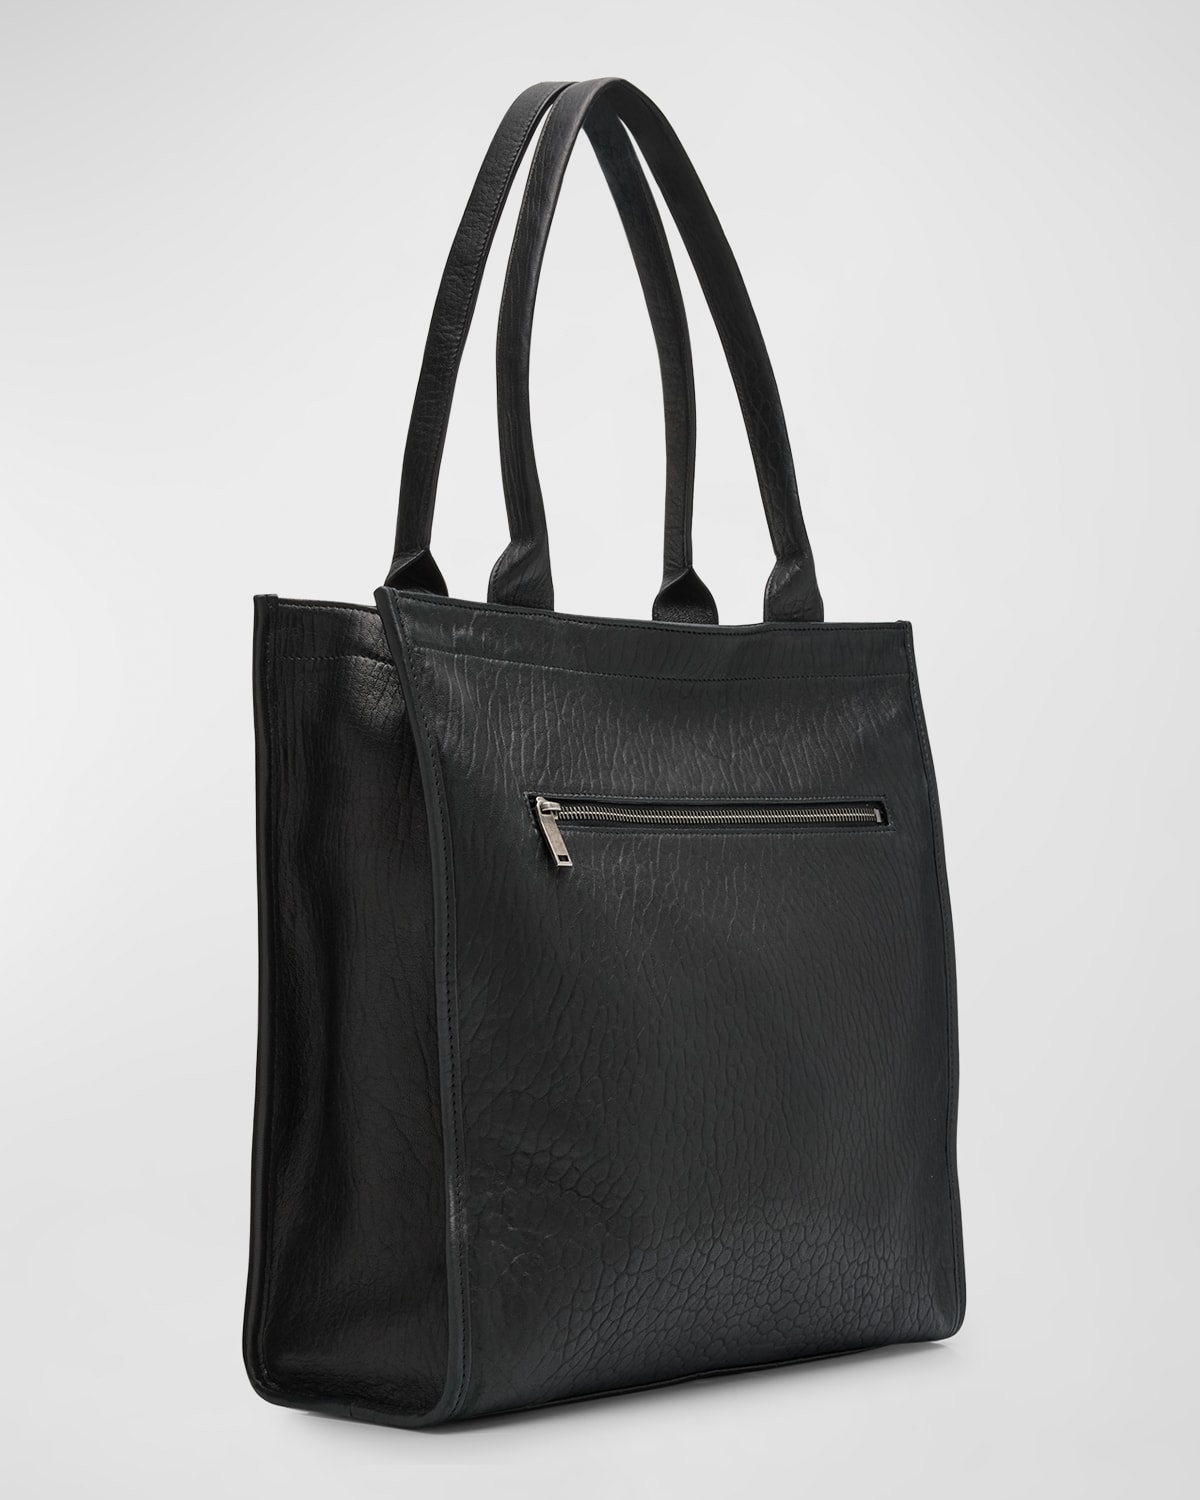 Men's Tote Bag in Leather - 4